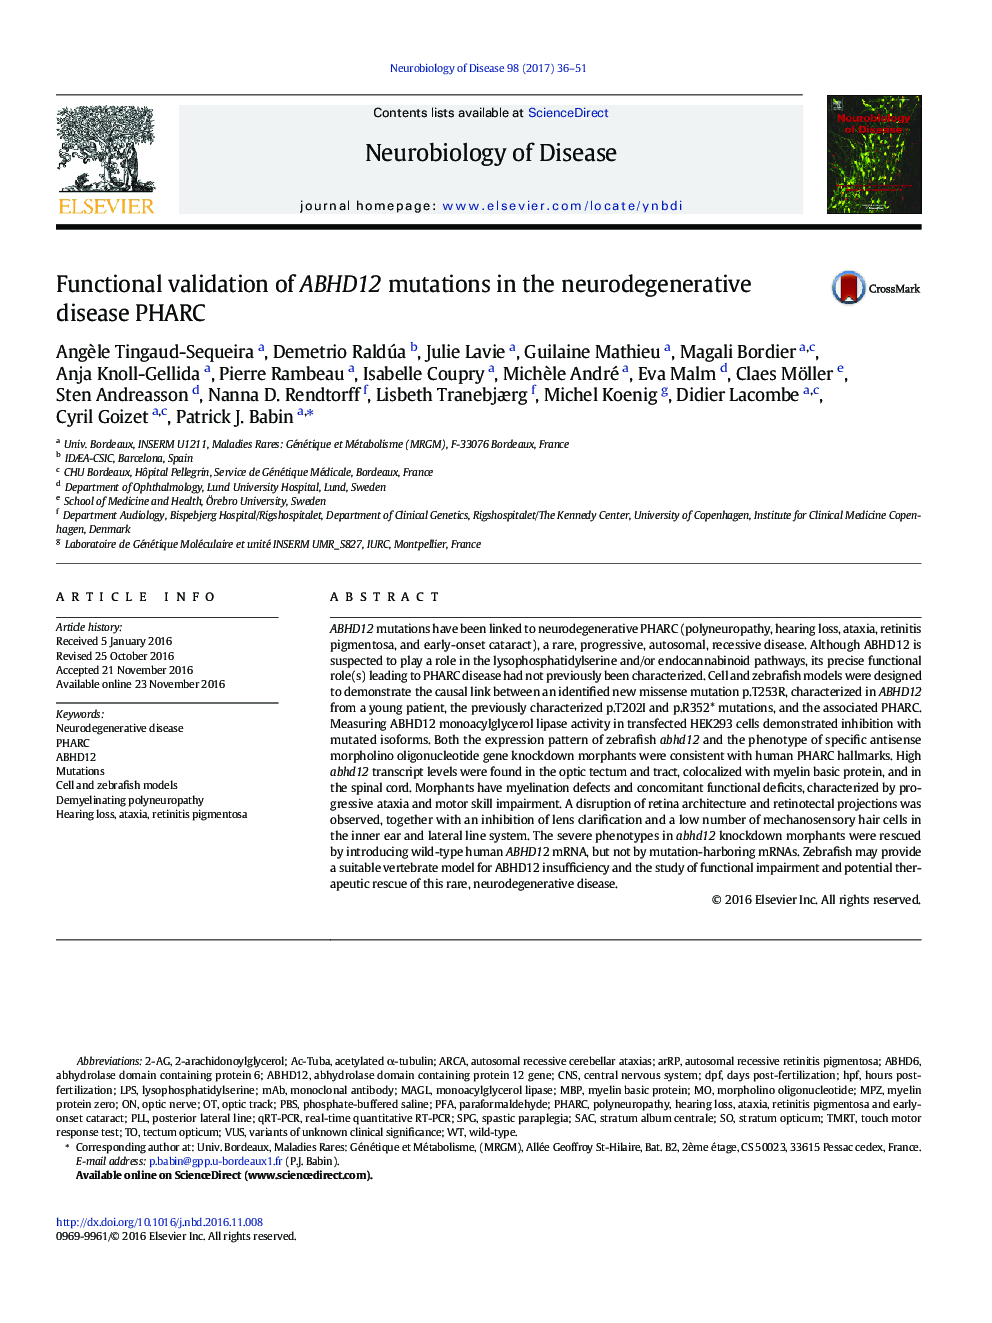 Functional validation of ABHD12 mutations in the neurodegenerative disease PHARC